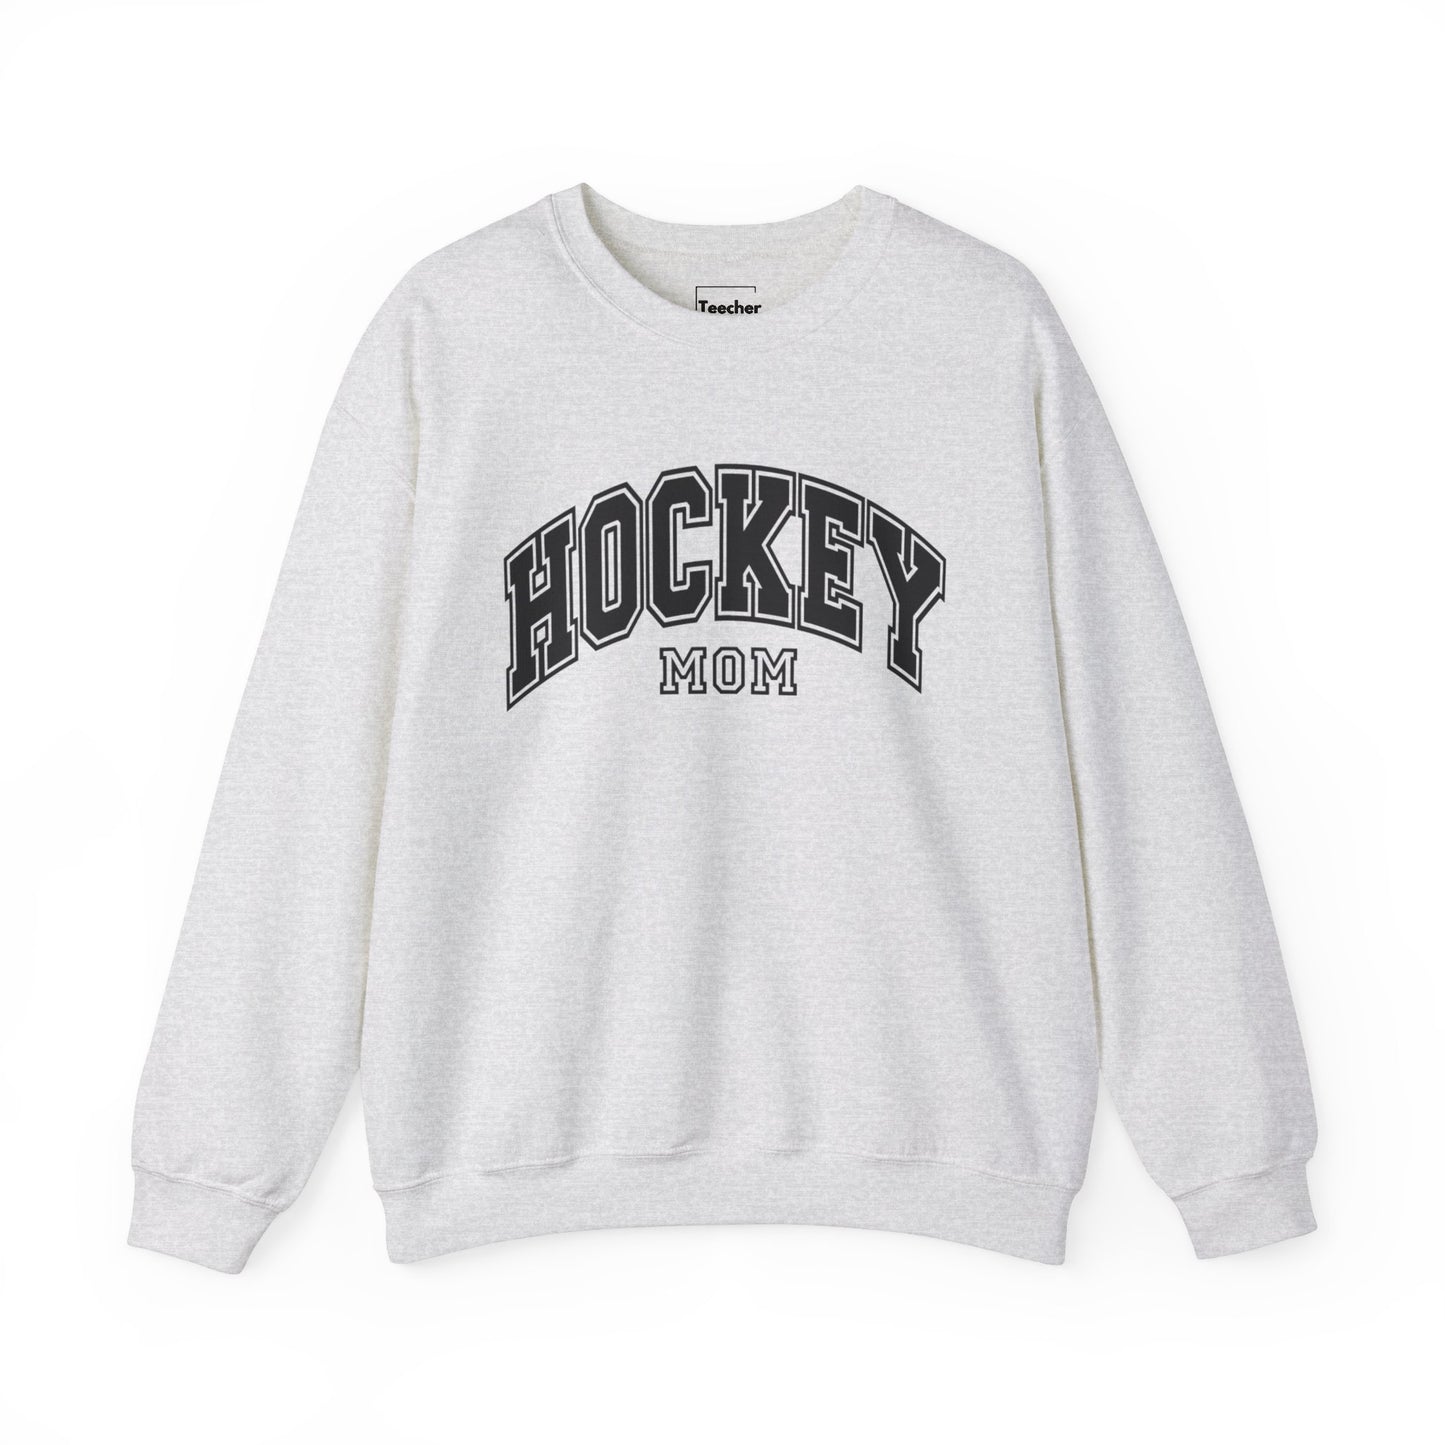 Hockey Mom Crewneck Sweatshirt